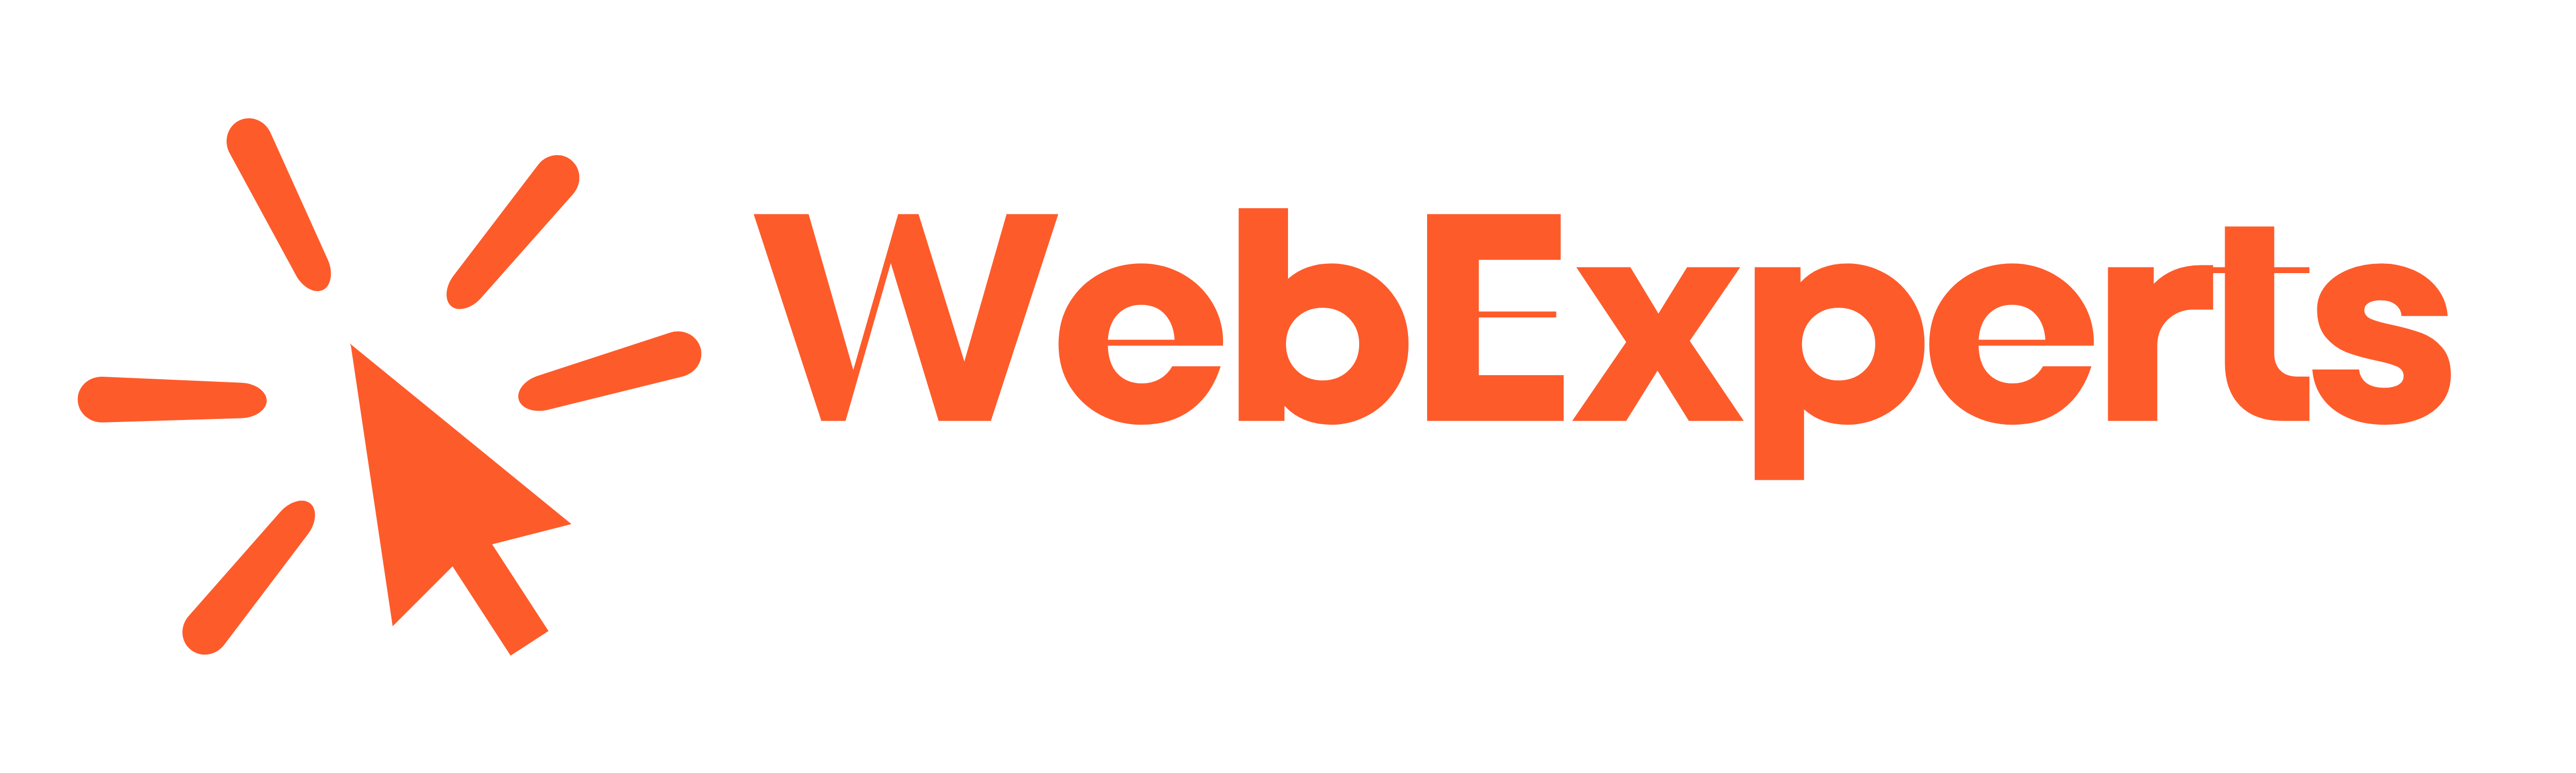 Web Experts Online Services